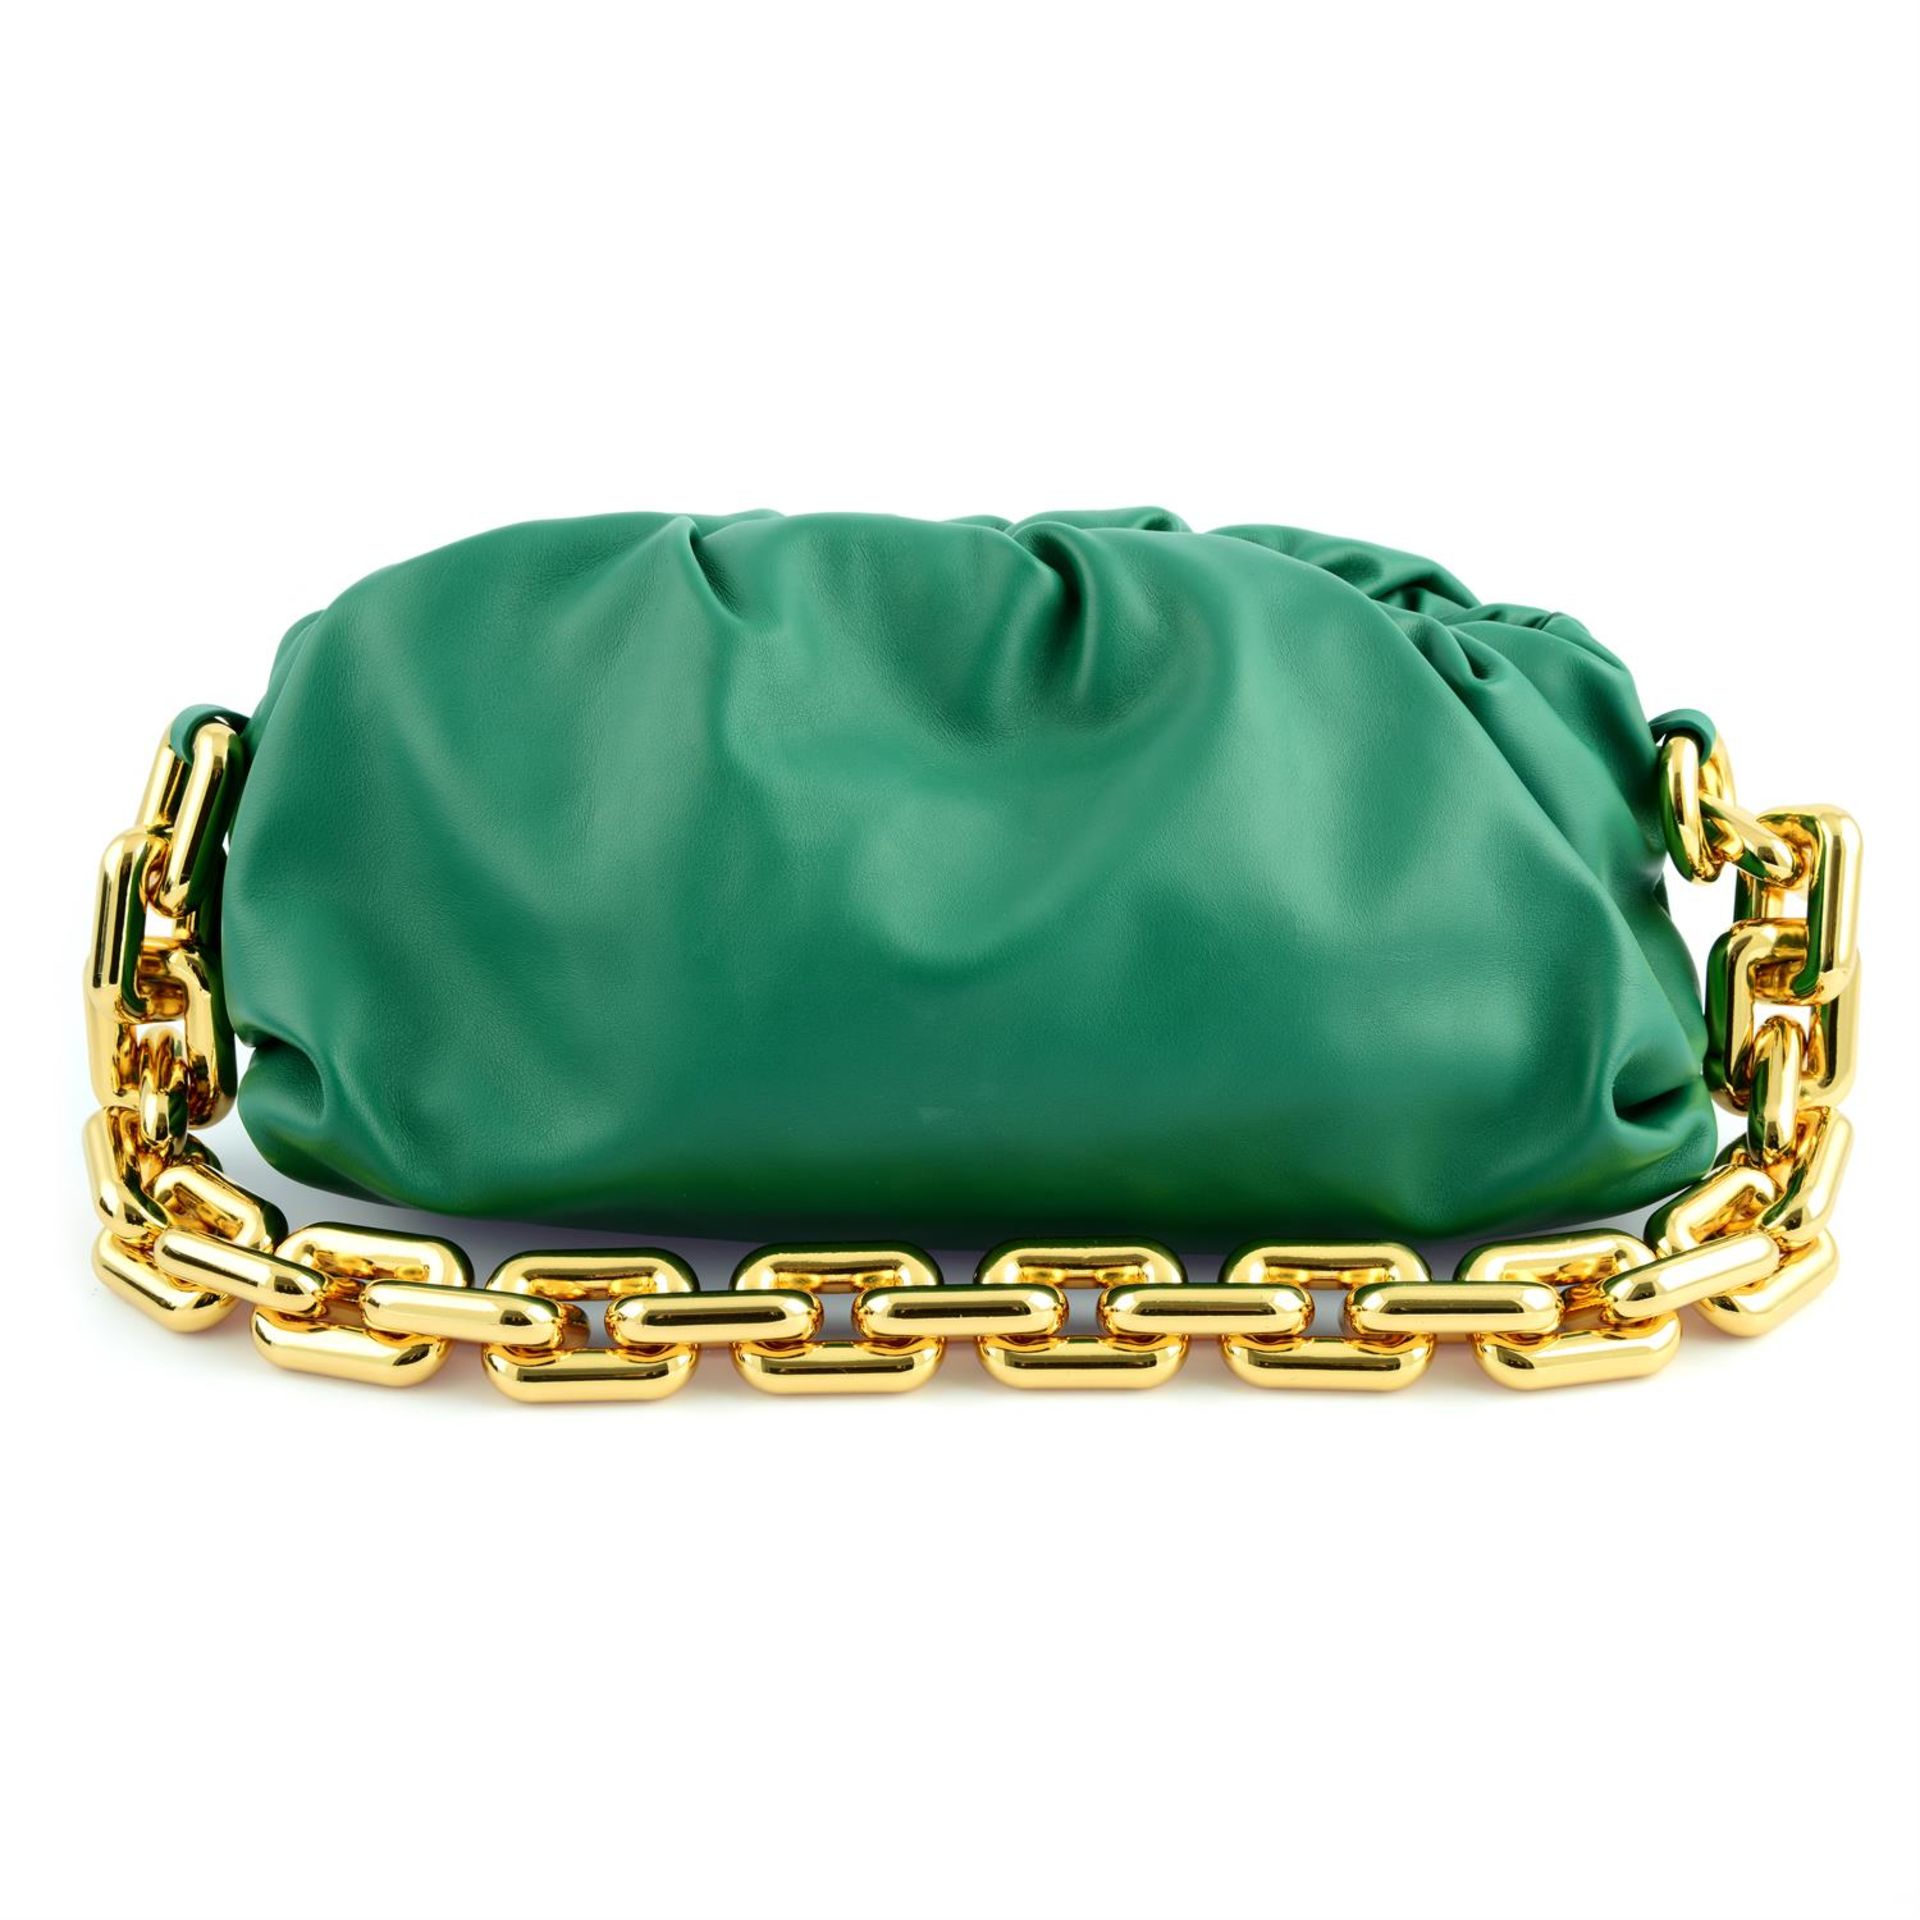 BOTTEGA VENETA - a green leather chain pouch.